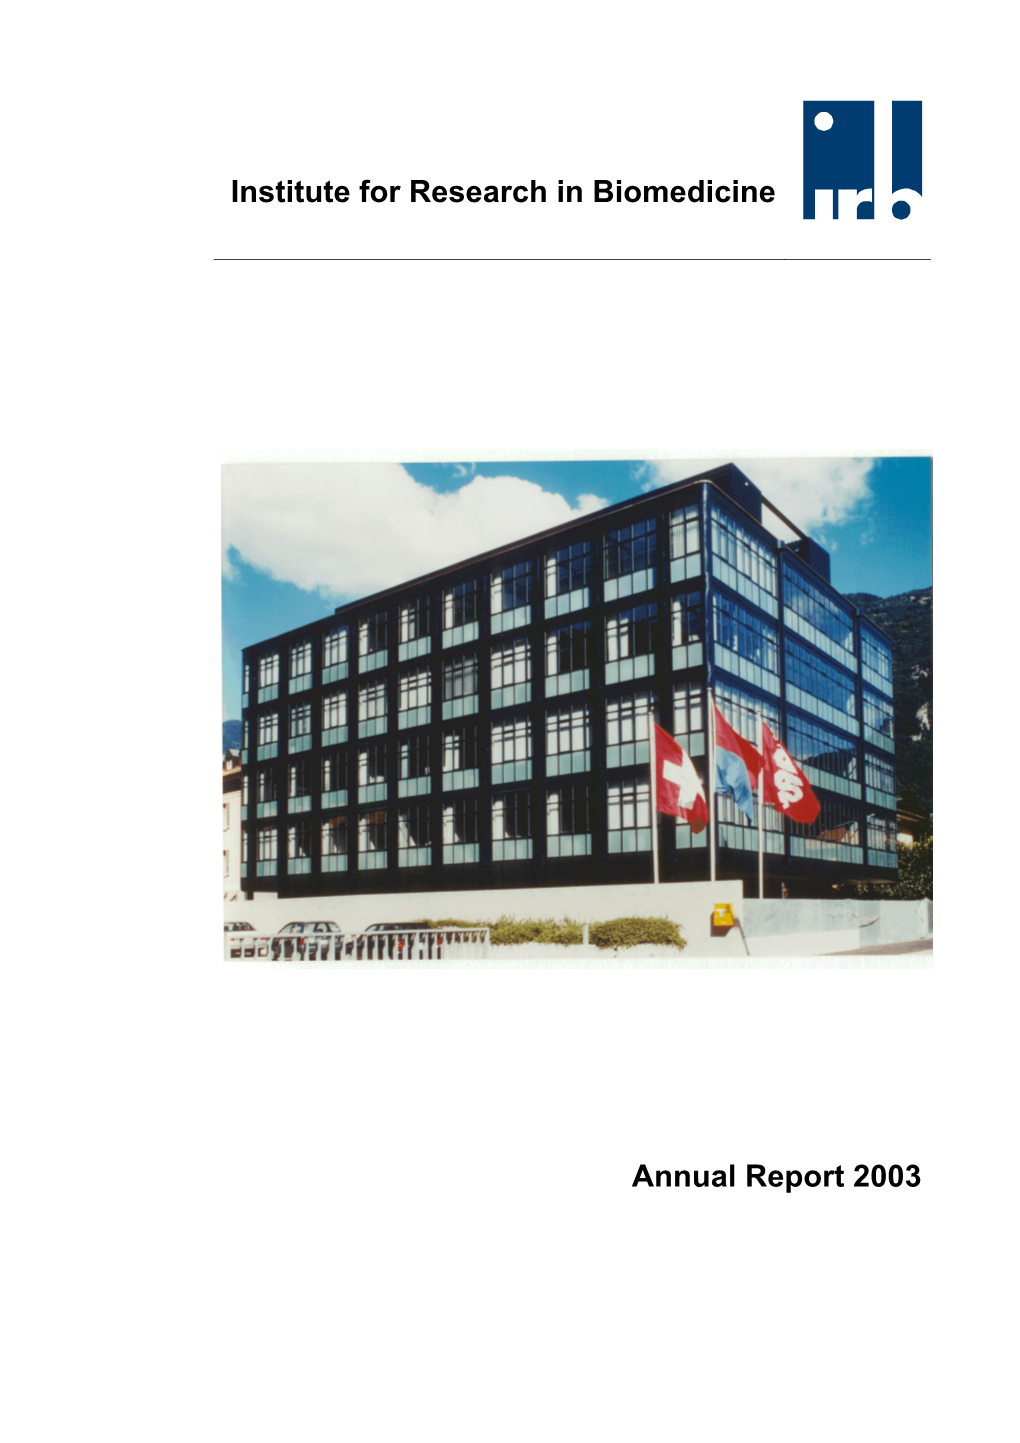 Institute for Research in Biomedicine Annual Report 2003